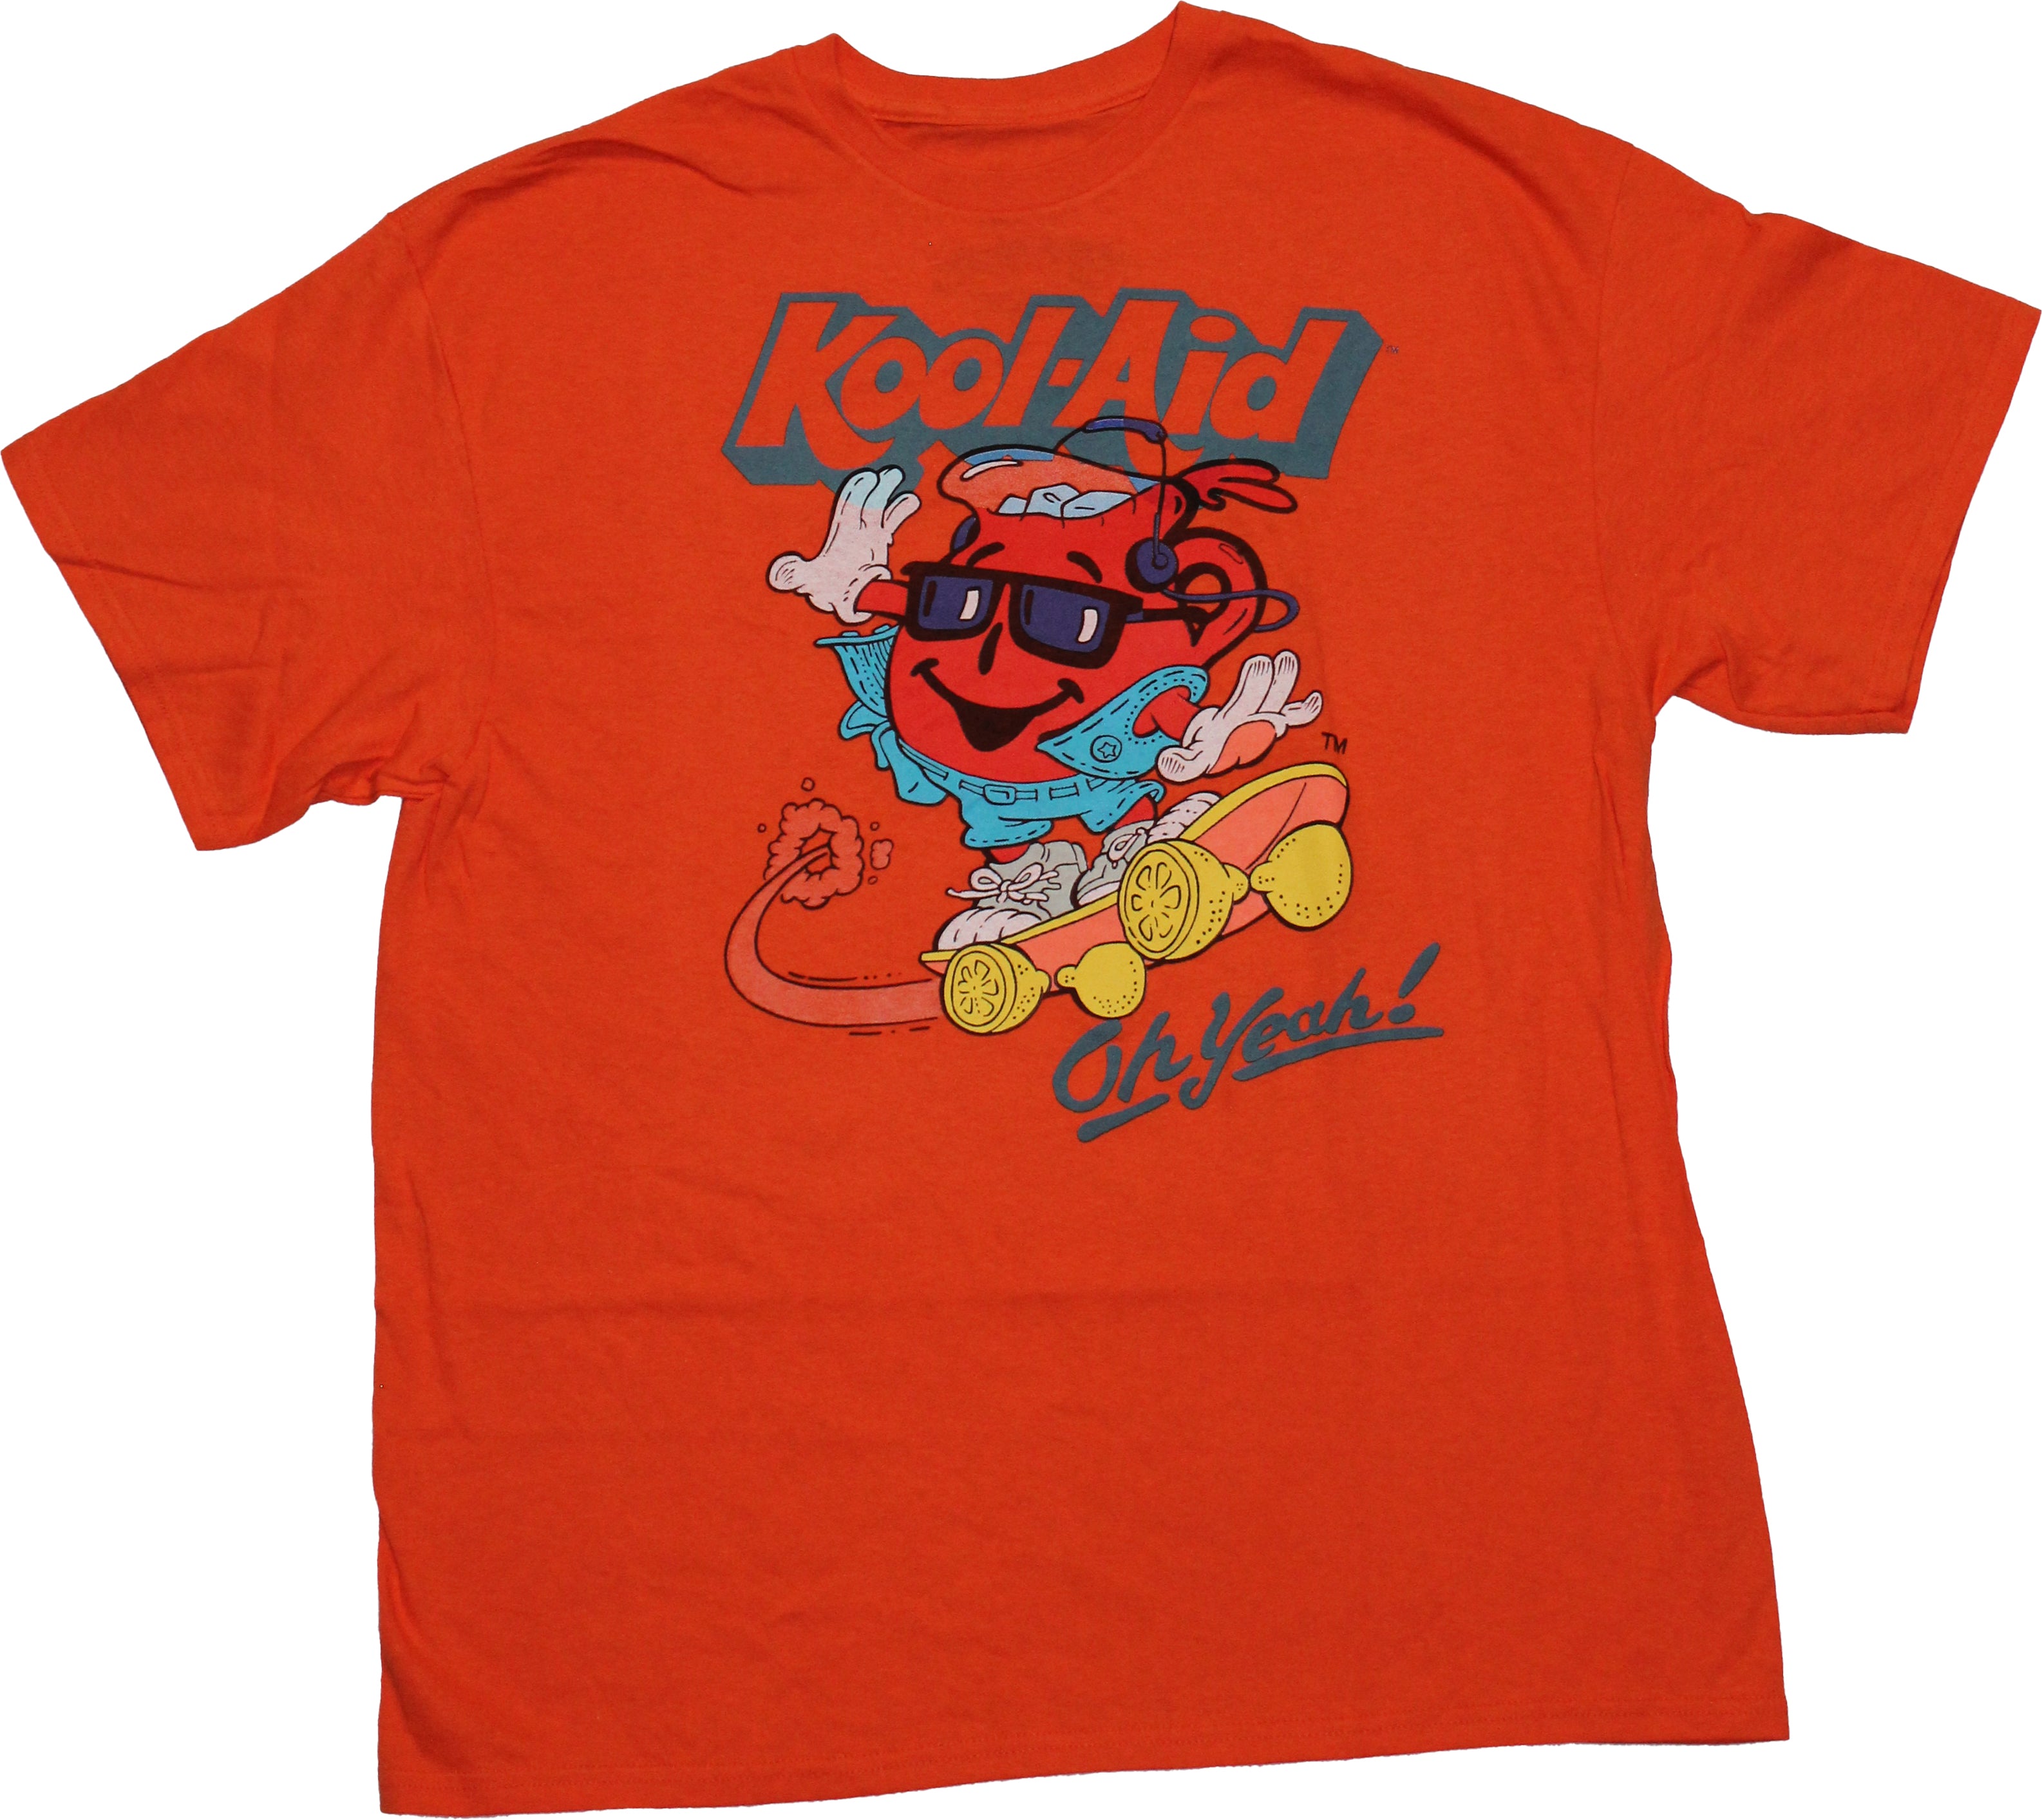 Kool-Aid Mens T-Shirt - Man on Skateboard Oh Yeah!